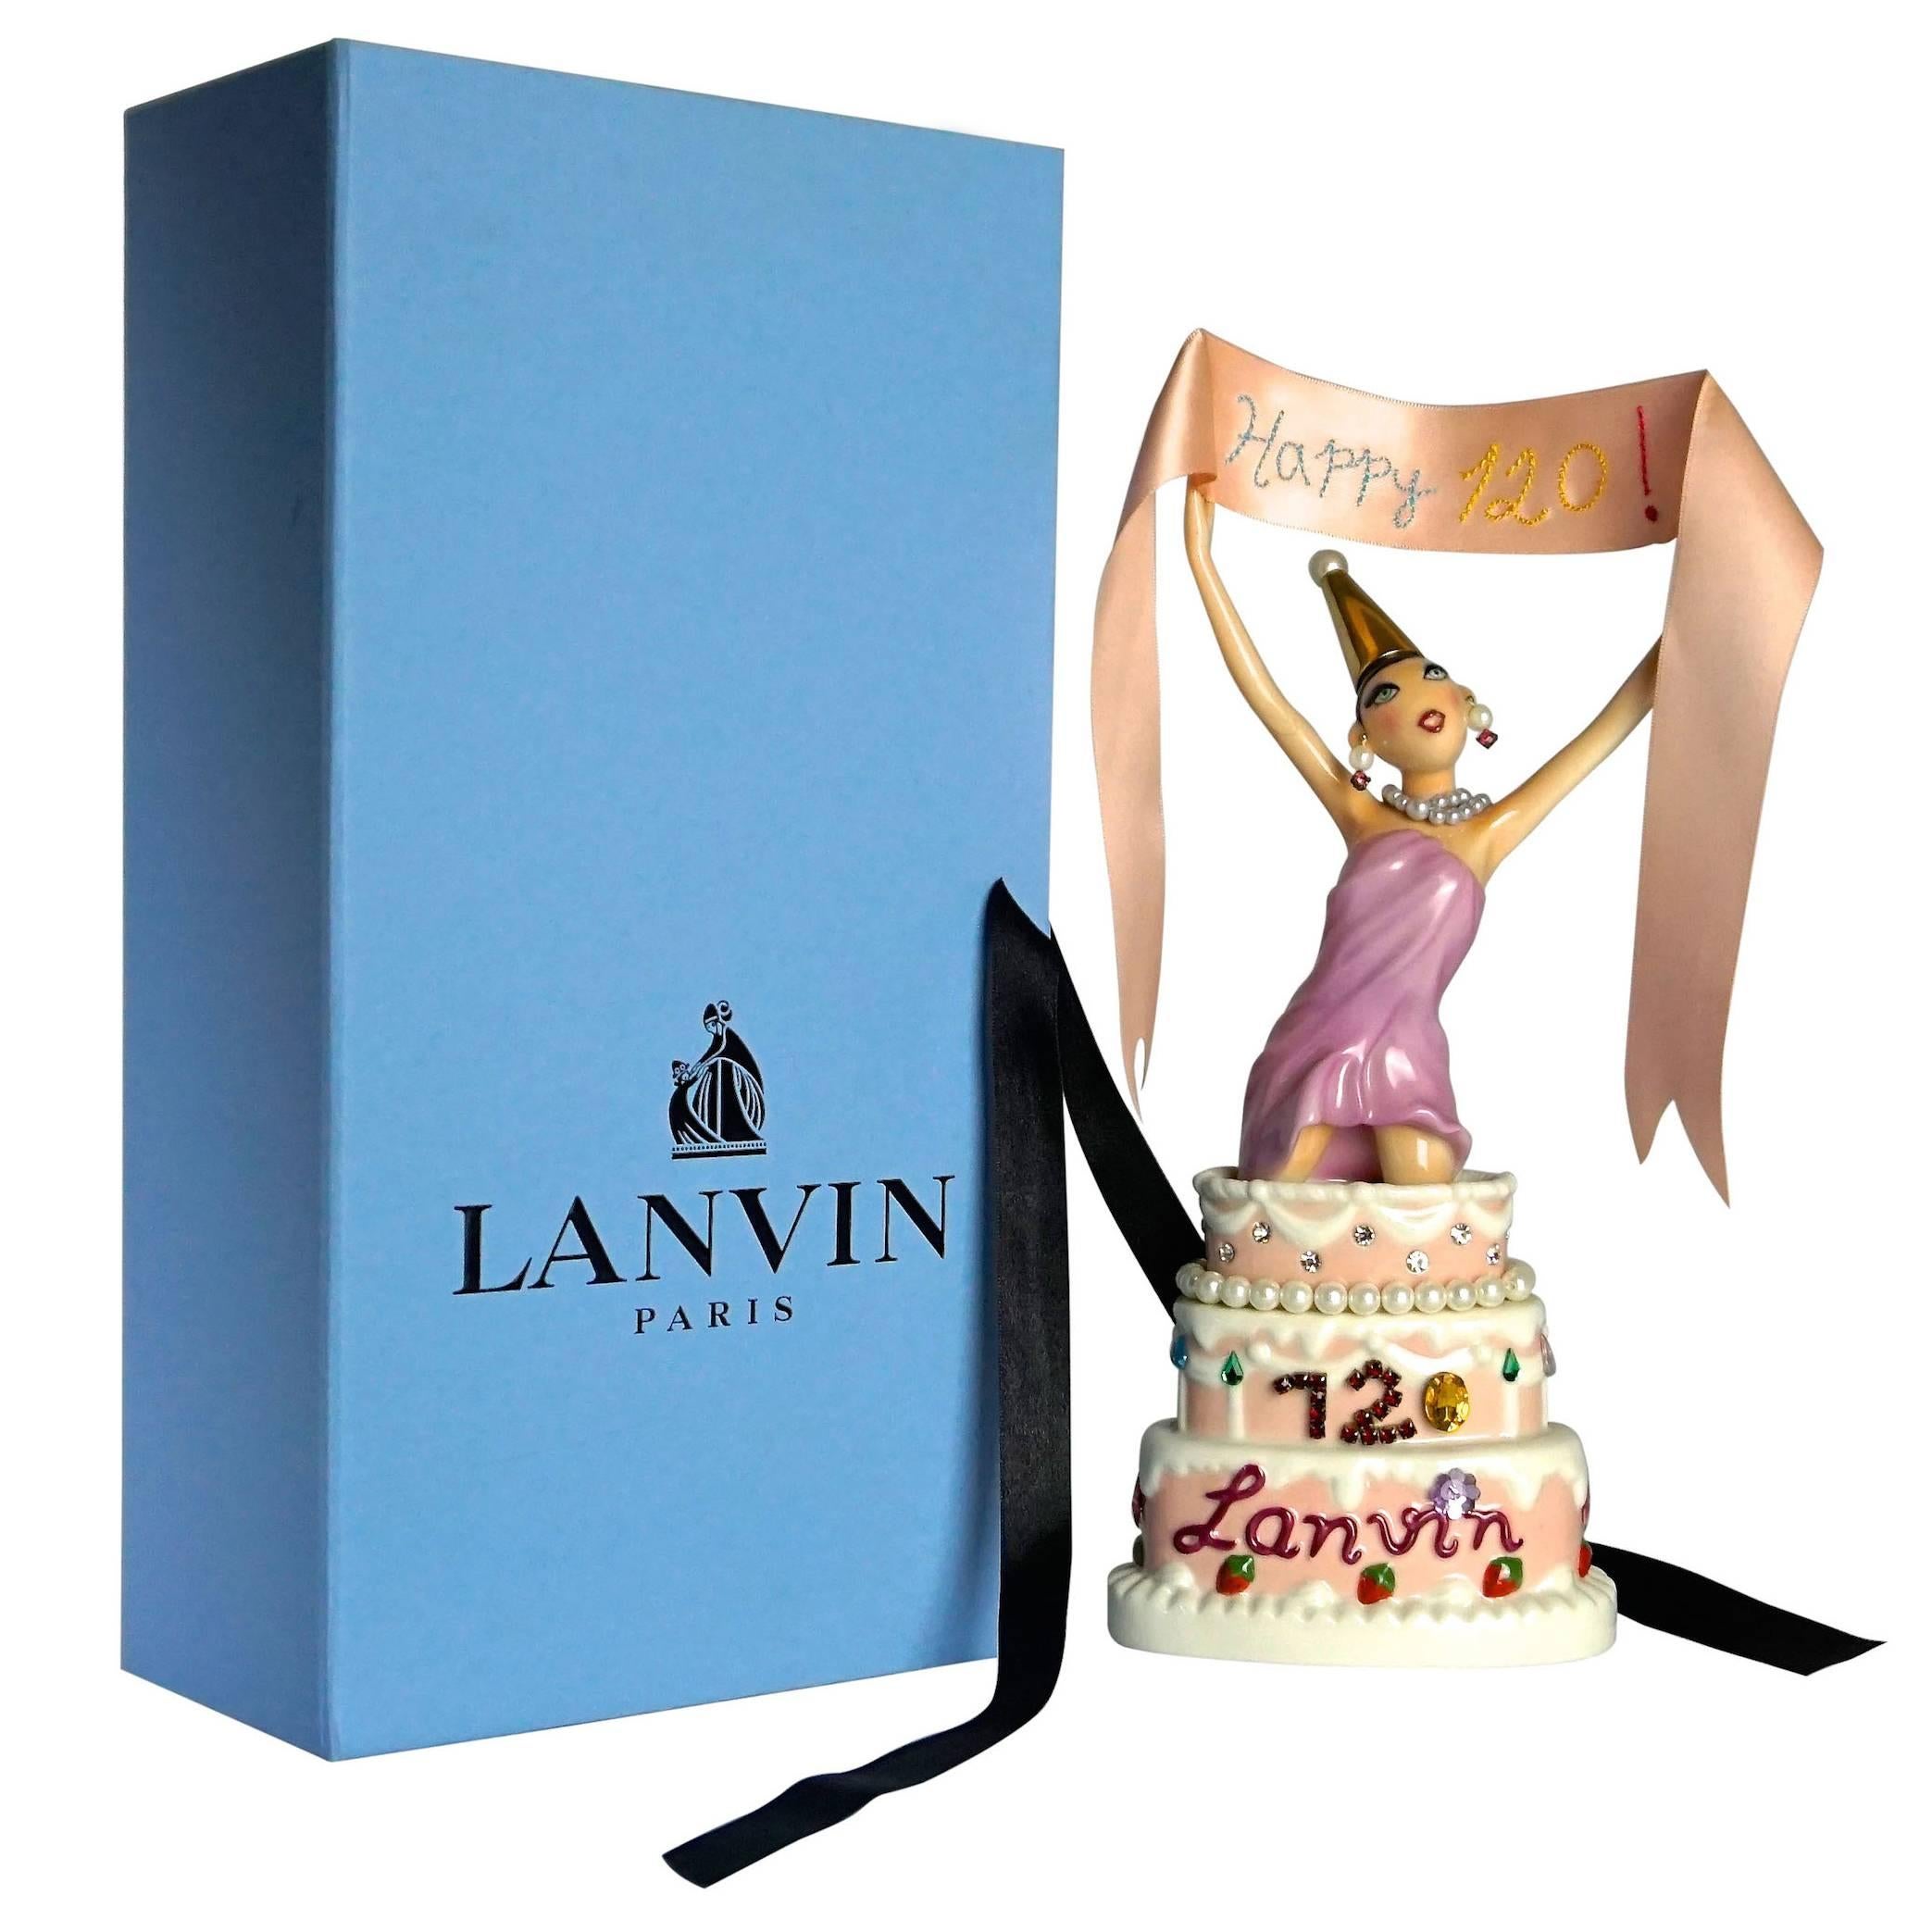 Lanvin "120th Anniversary" Porcelain Figurines For Sale